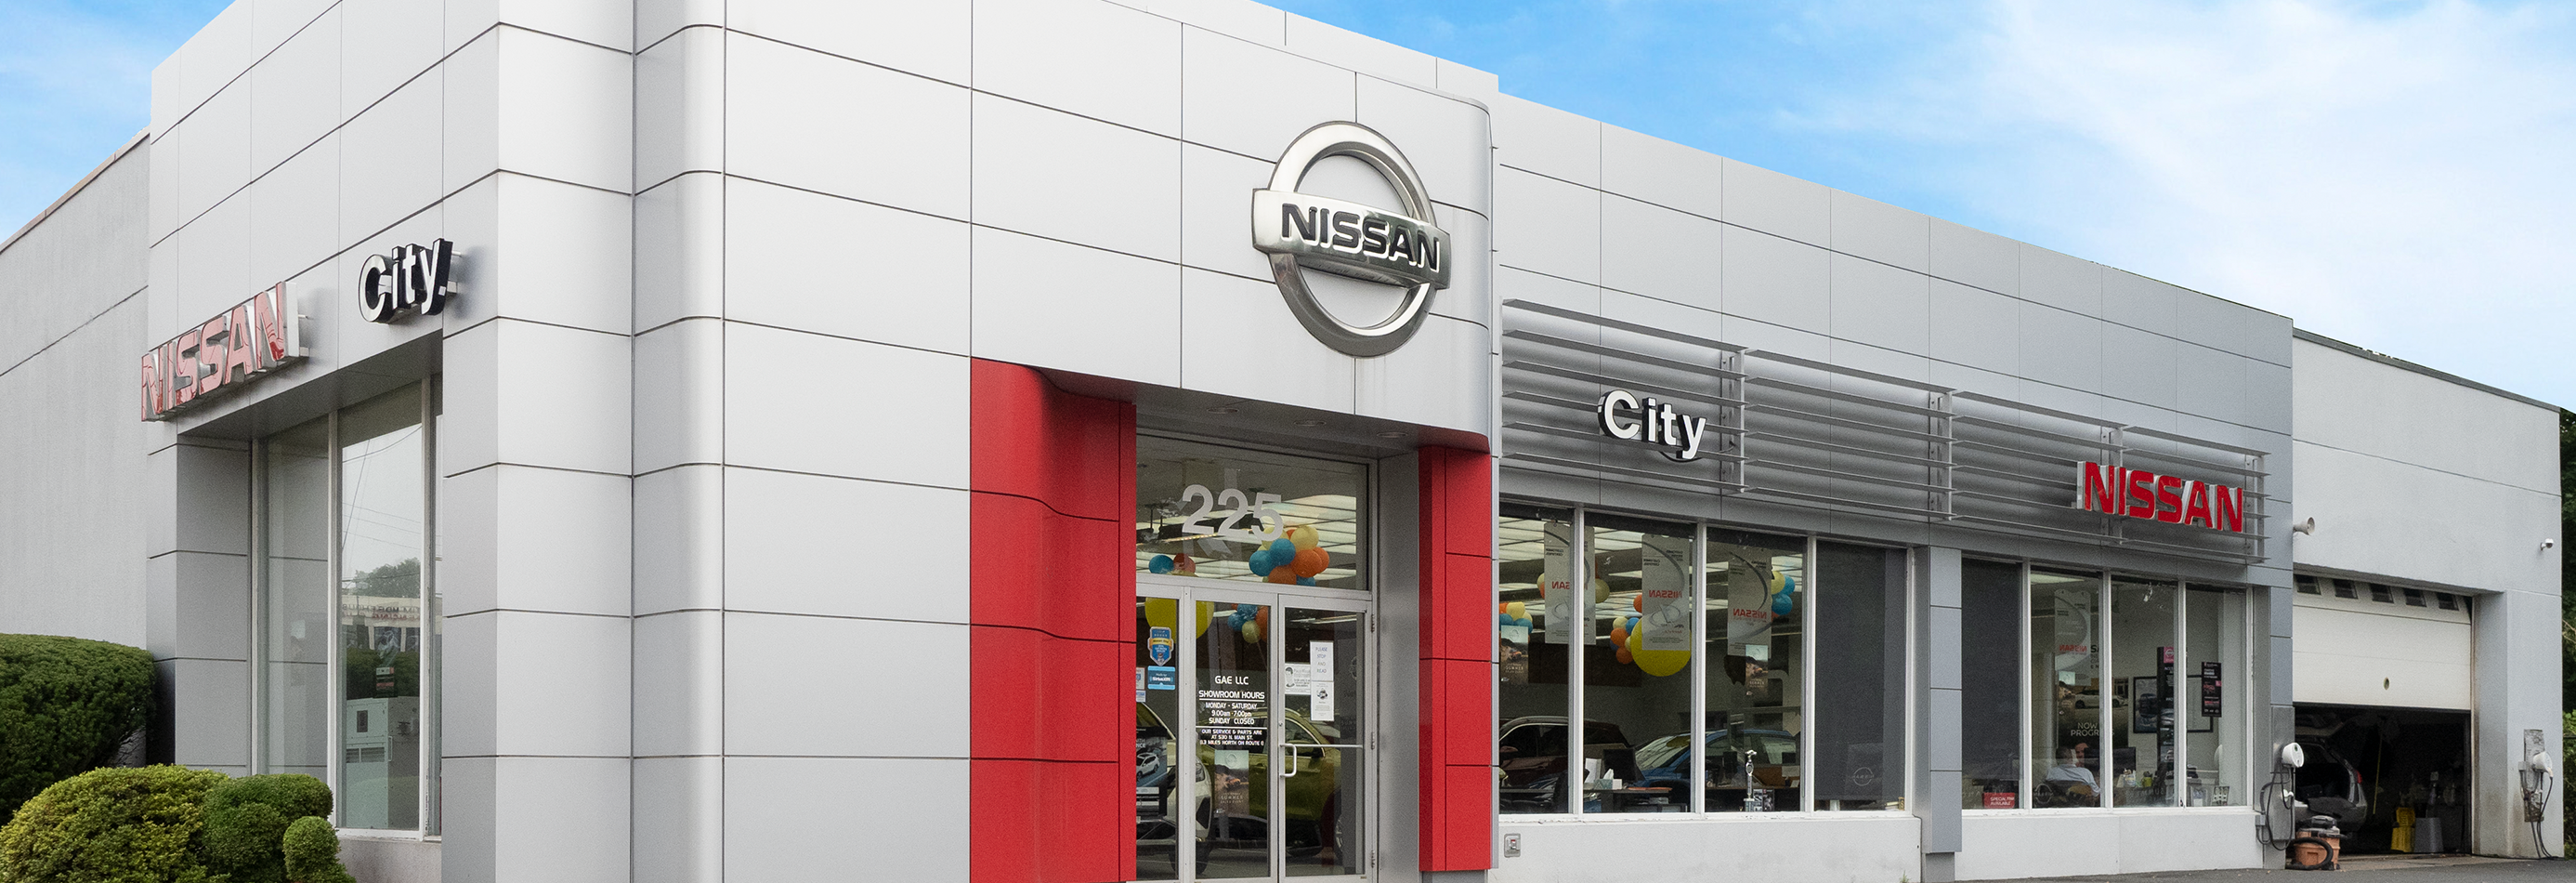 Nissan City serving Greenburgh NY